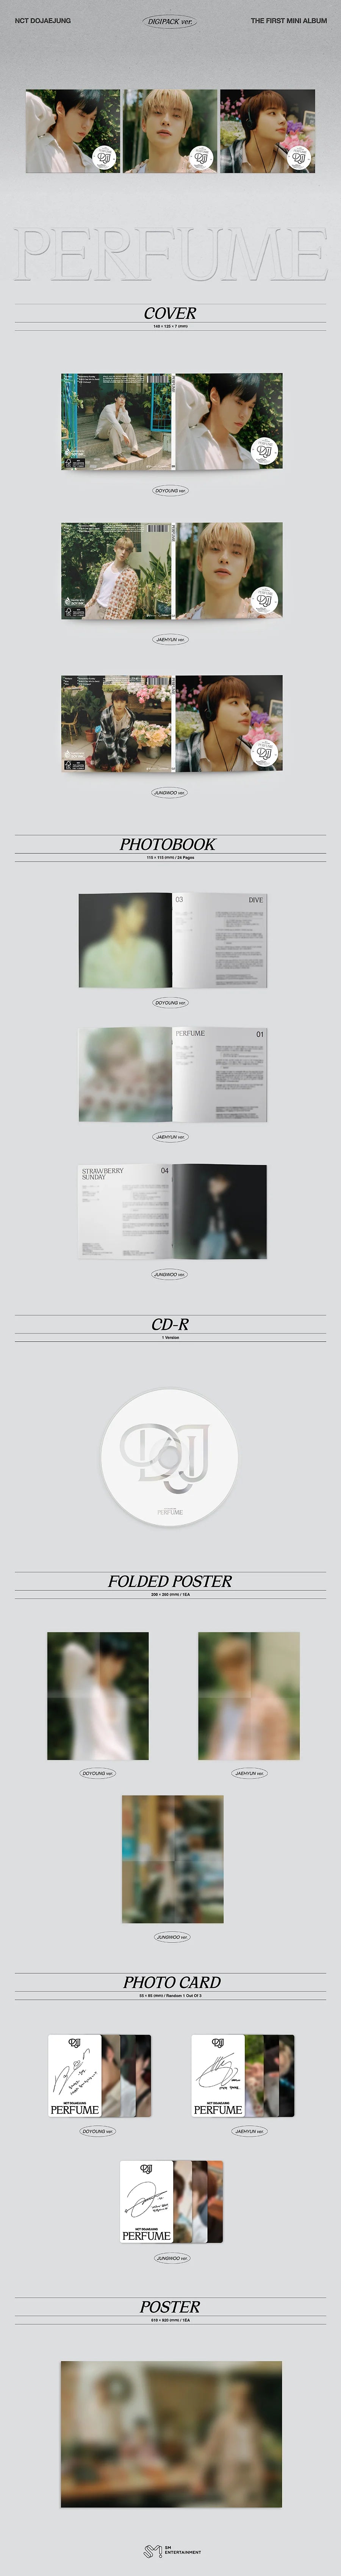 NCT DOJAEJUNG - 1st Mini Album [PERFUME] (Digipack)